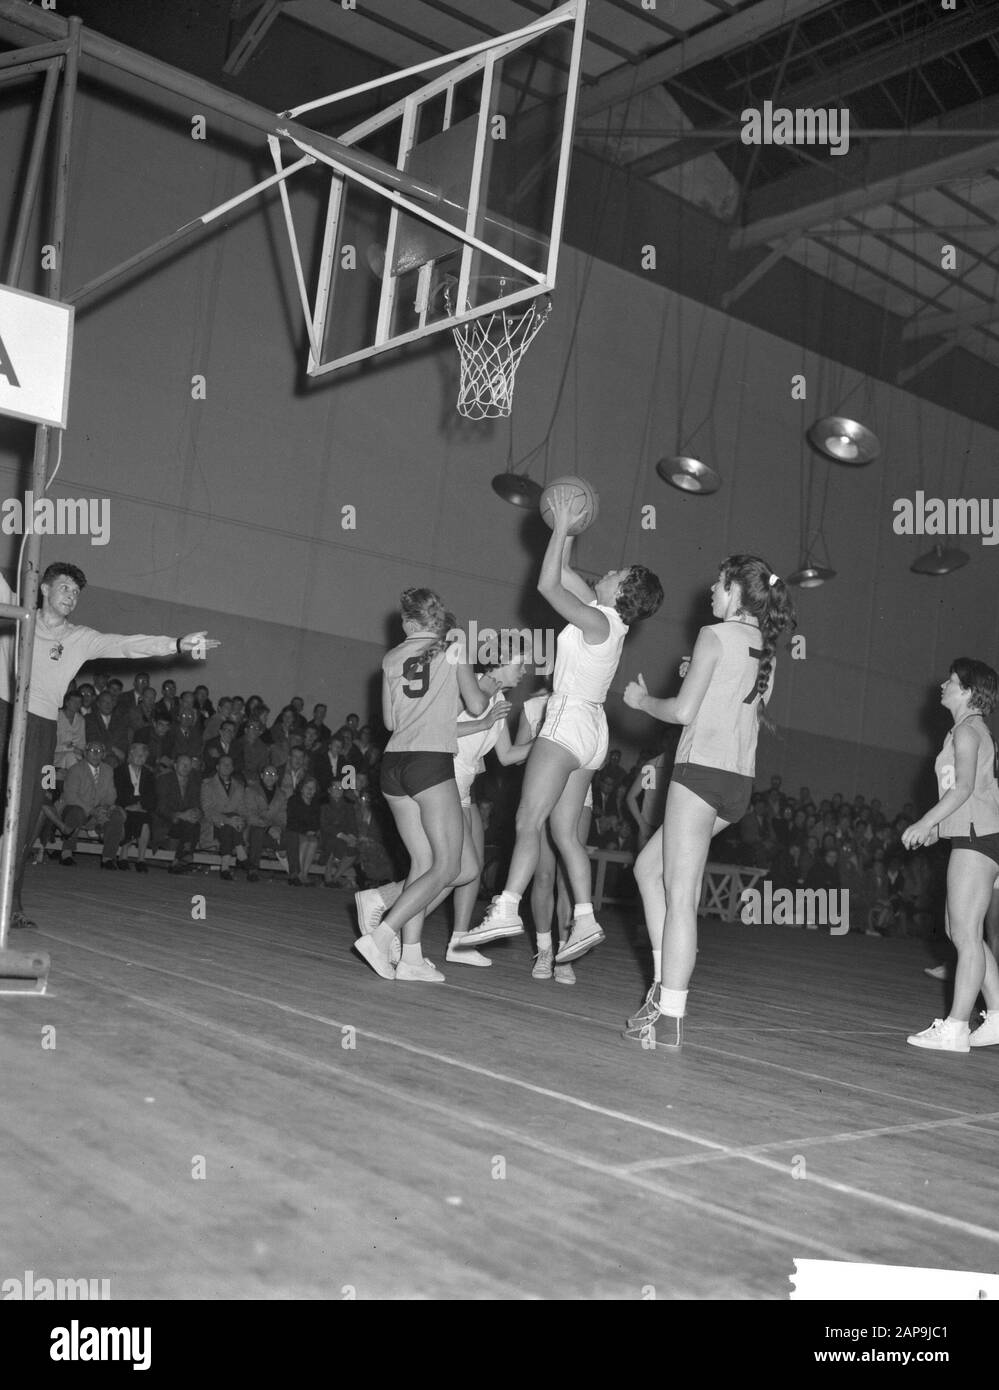 Women's basketball competition Netherlands vs Germany Date: October 24,  1961 Location: Germany, Netherlands Keywords: Basketball, Interland matches  Stock Photo - Alamy